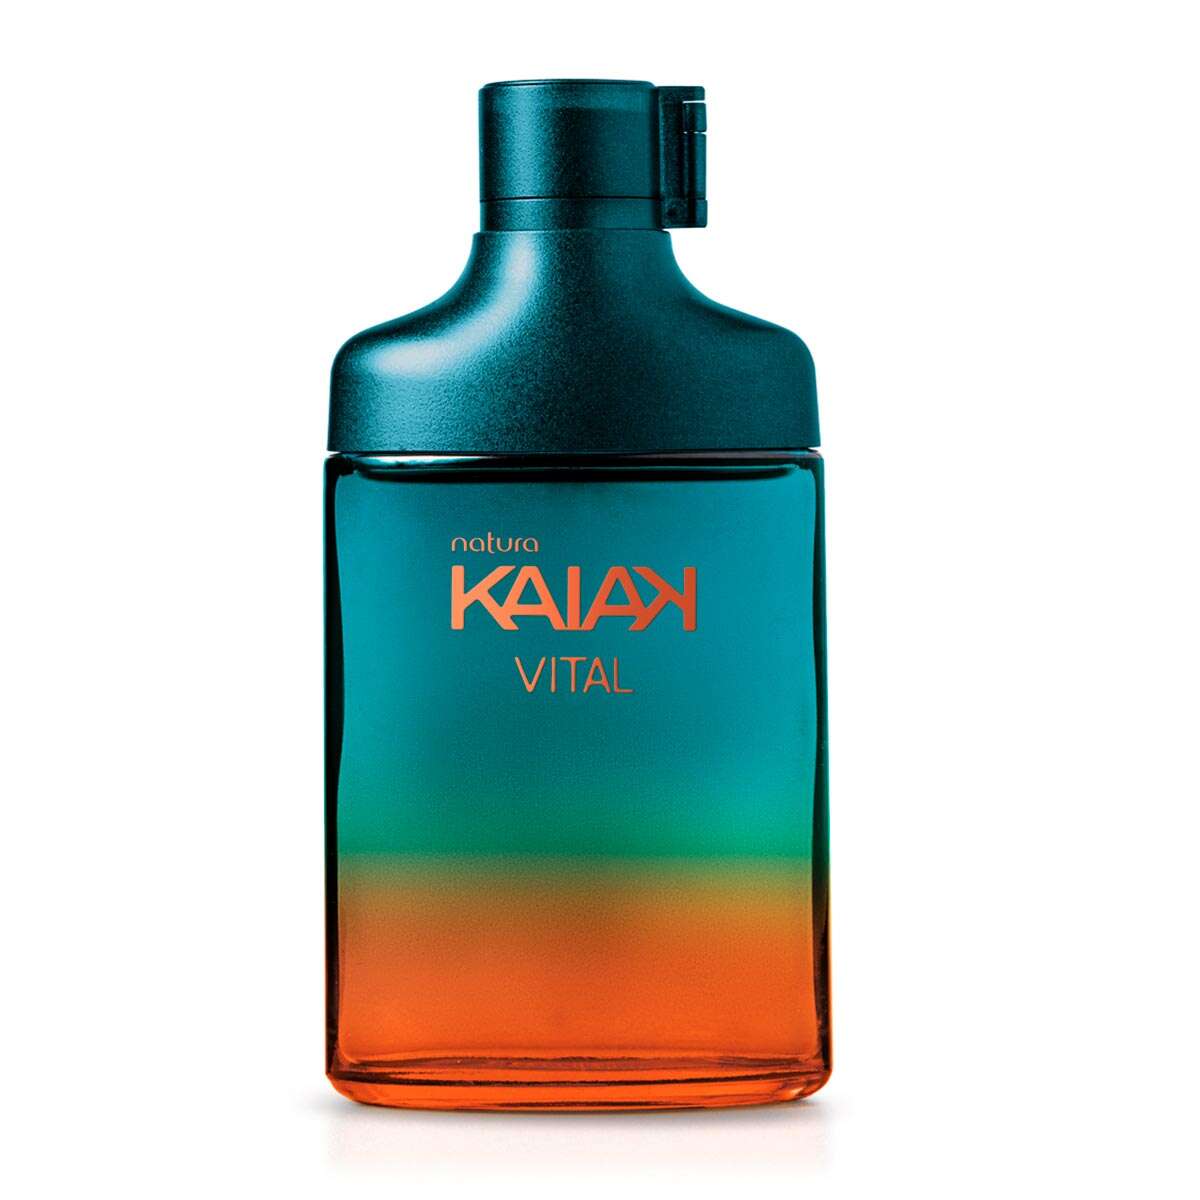 Kaiak Vital Men's Cologne déodorant - 100 ml